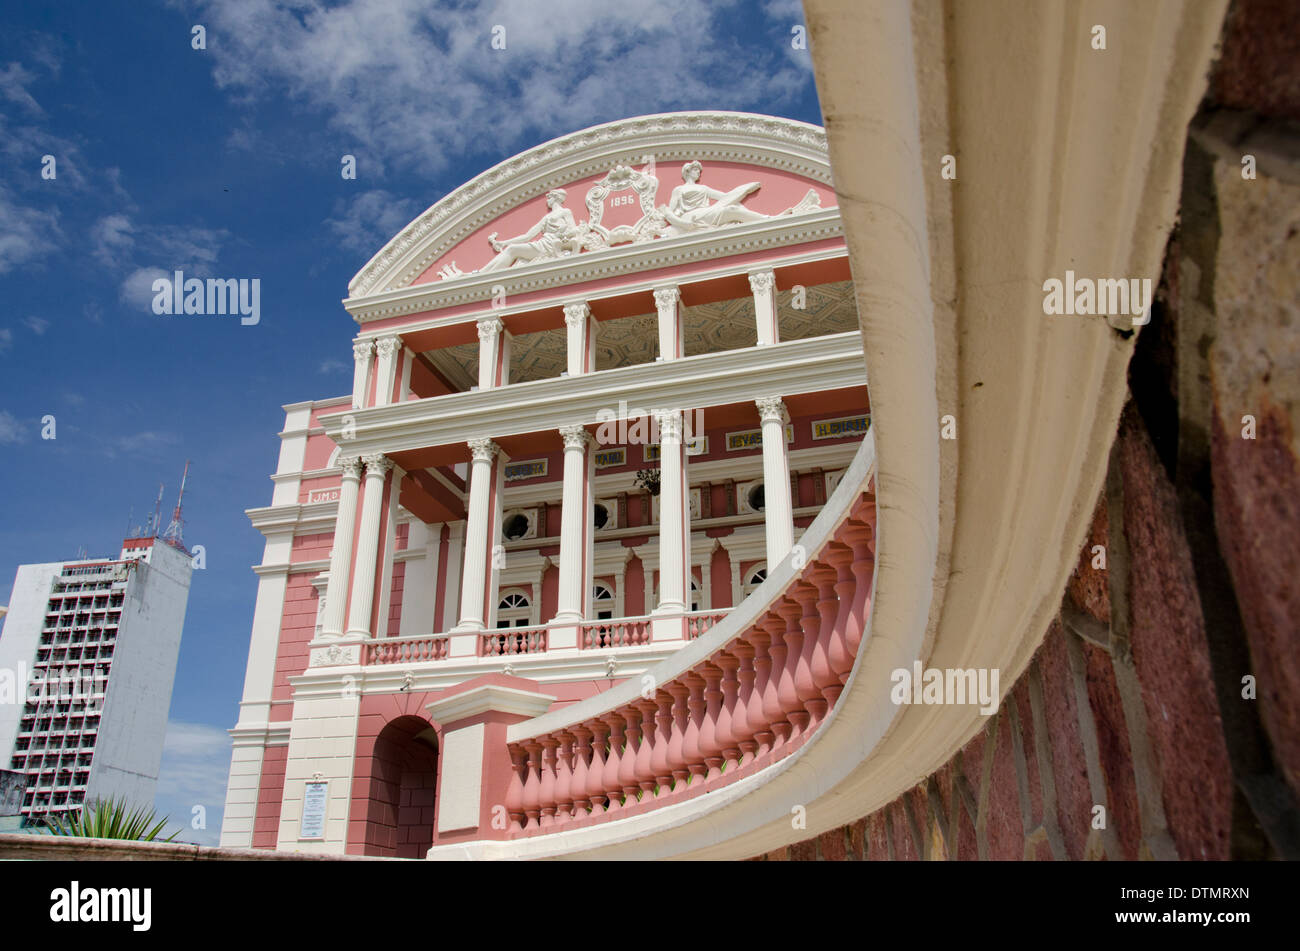 Il Brasile, Amazon, Manaus. Manaus storica Opera House (Teatro Amazonas), circa 1882, costruito in stile neoclassico. Foto Stock